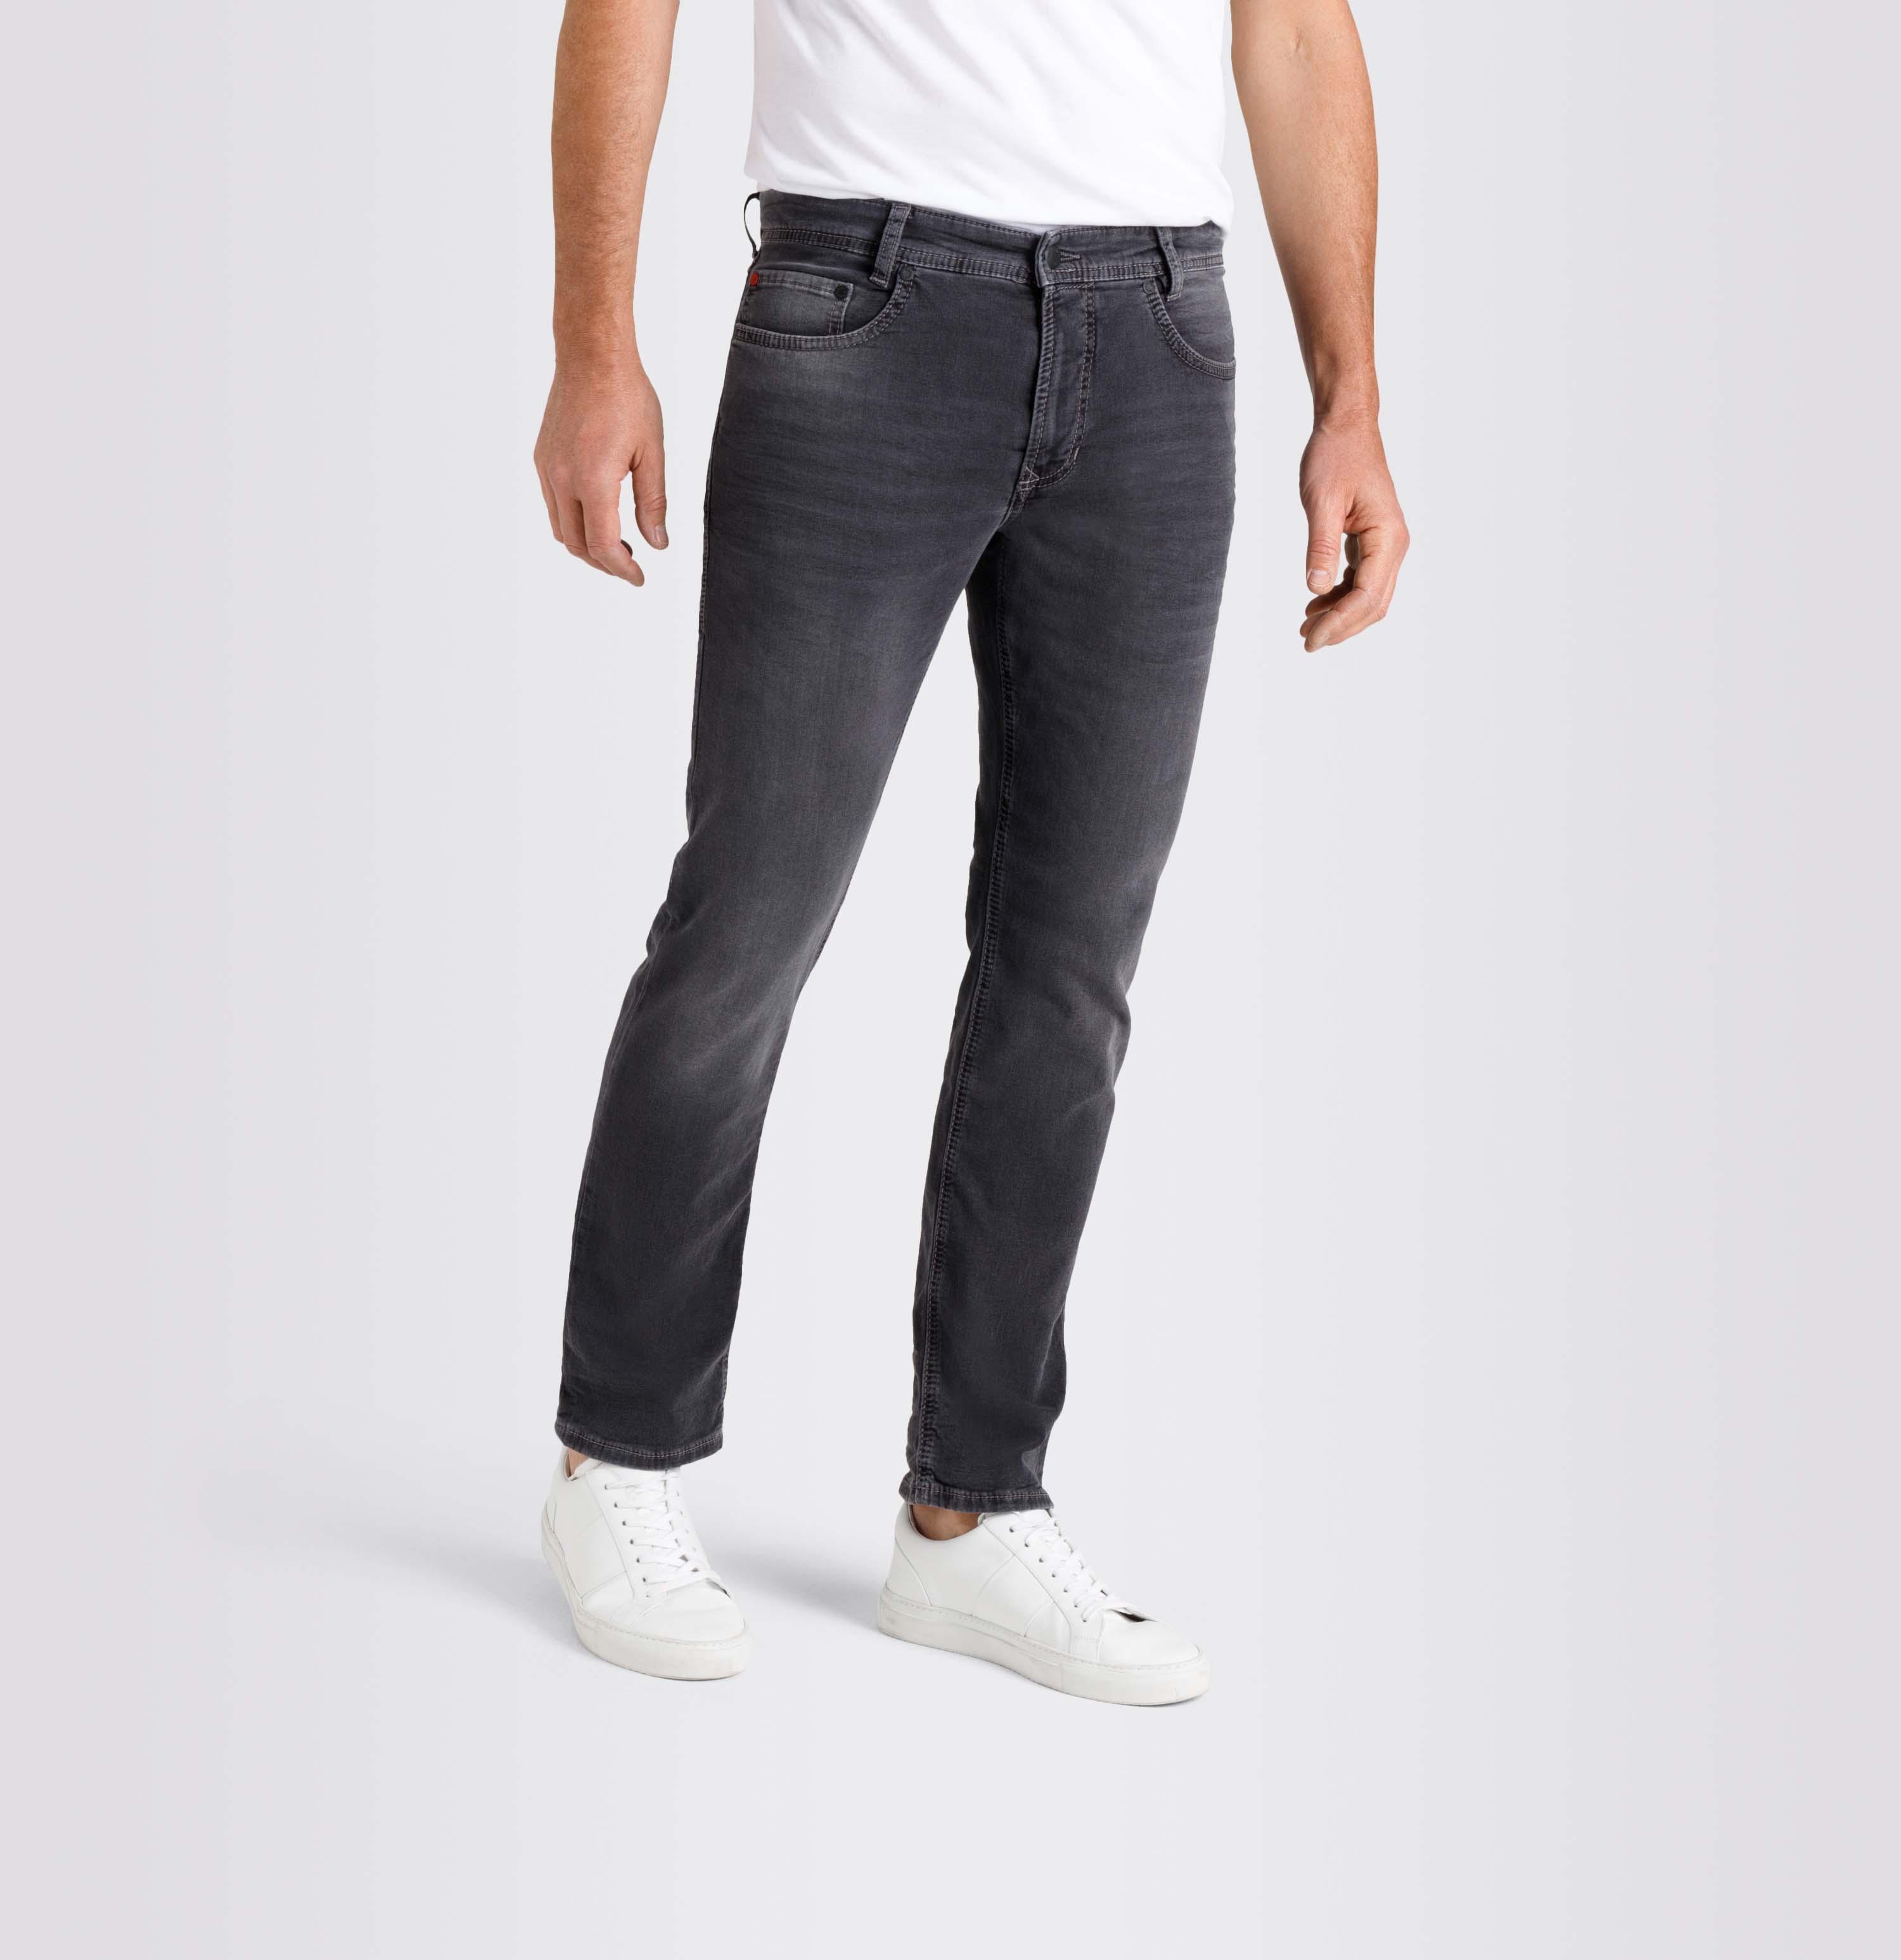 Herrenhose, Jog'n Jeans By Mac, grau H830 | AT - MAC Jeans Shop